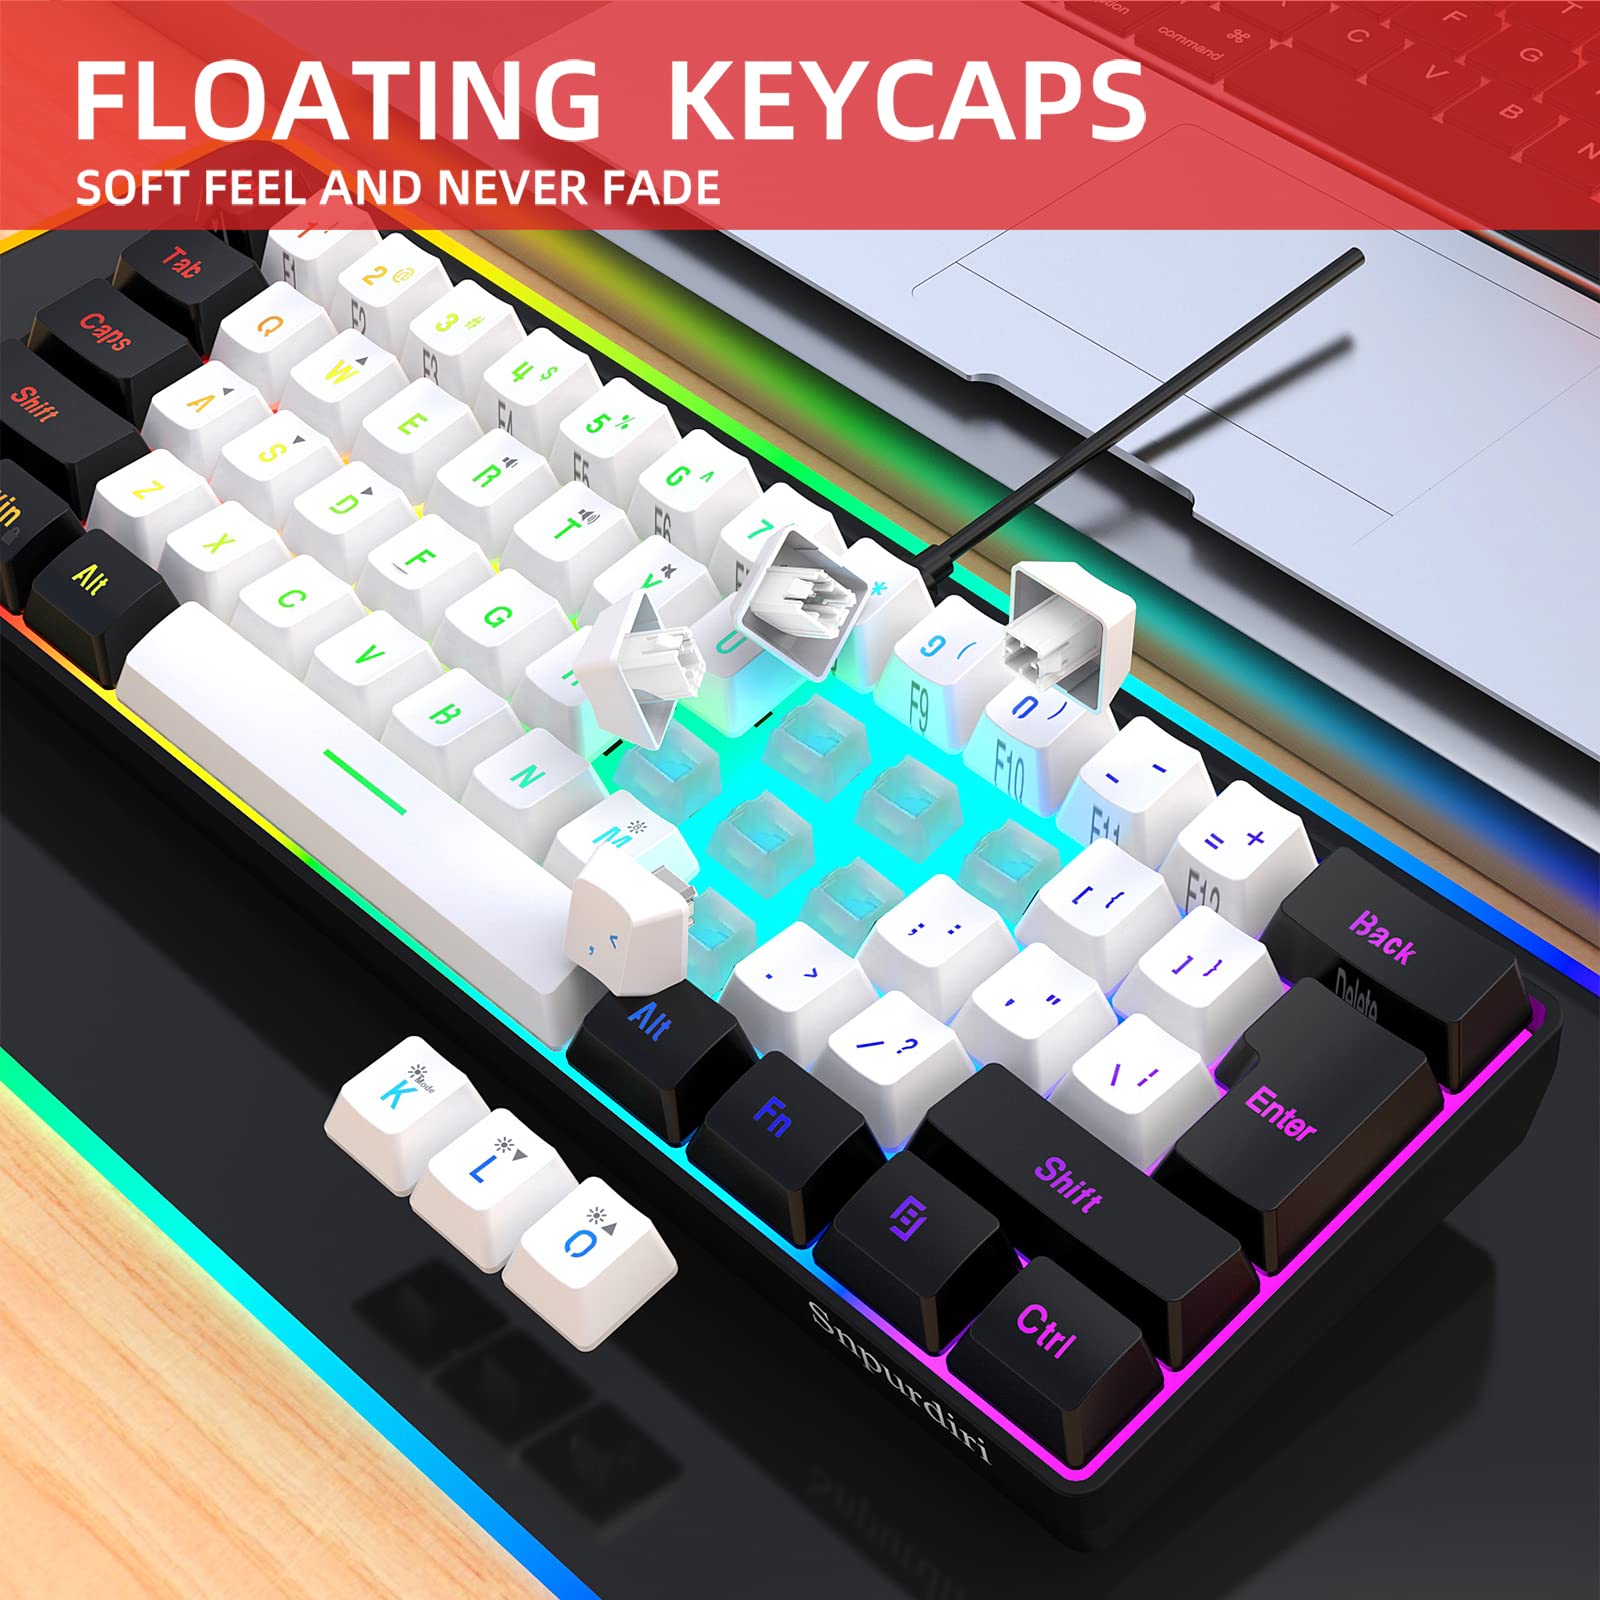 Snpurdiri 60% Wired Gaming Keyboard, RGB Backlit Mini Keyboard, Waterproof Small Ultra-Compact 61 Keys Keyboard for PC/Mac Gamer, Typist, Travel, Easy to Carry on Business Trip(Black-White) - amzGamess